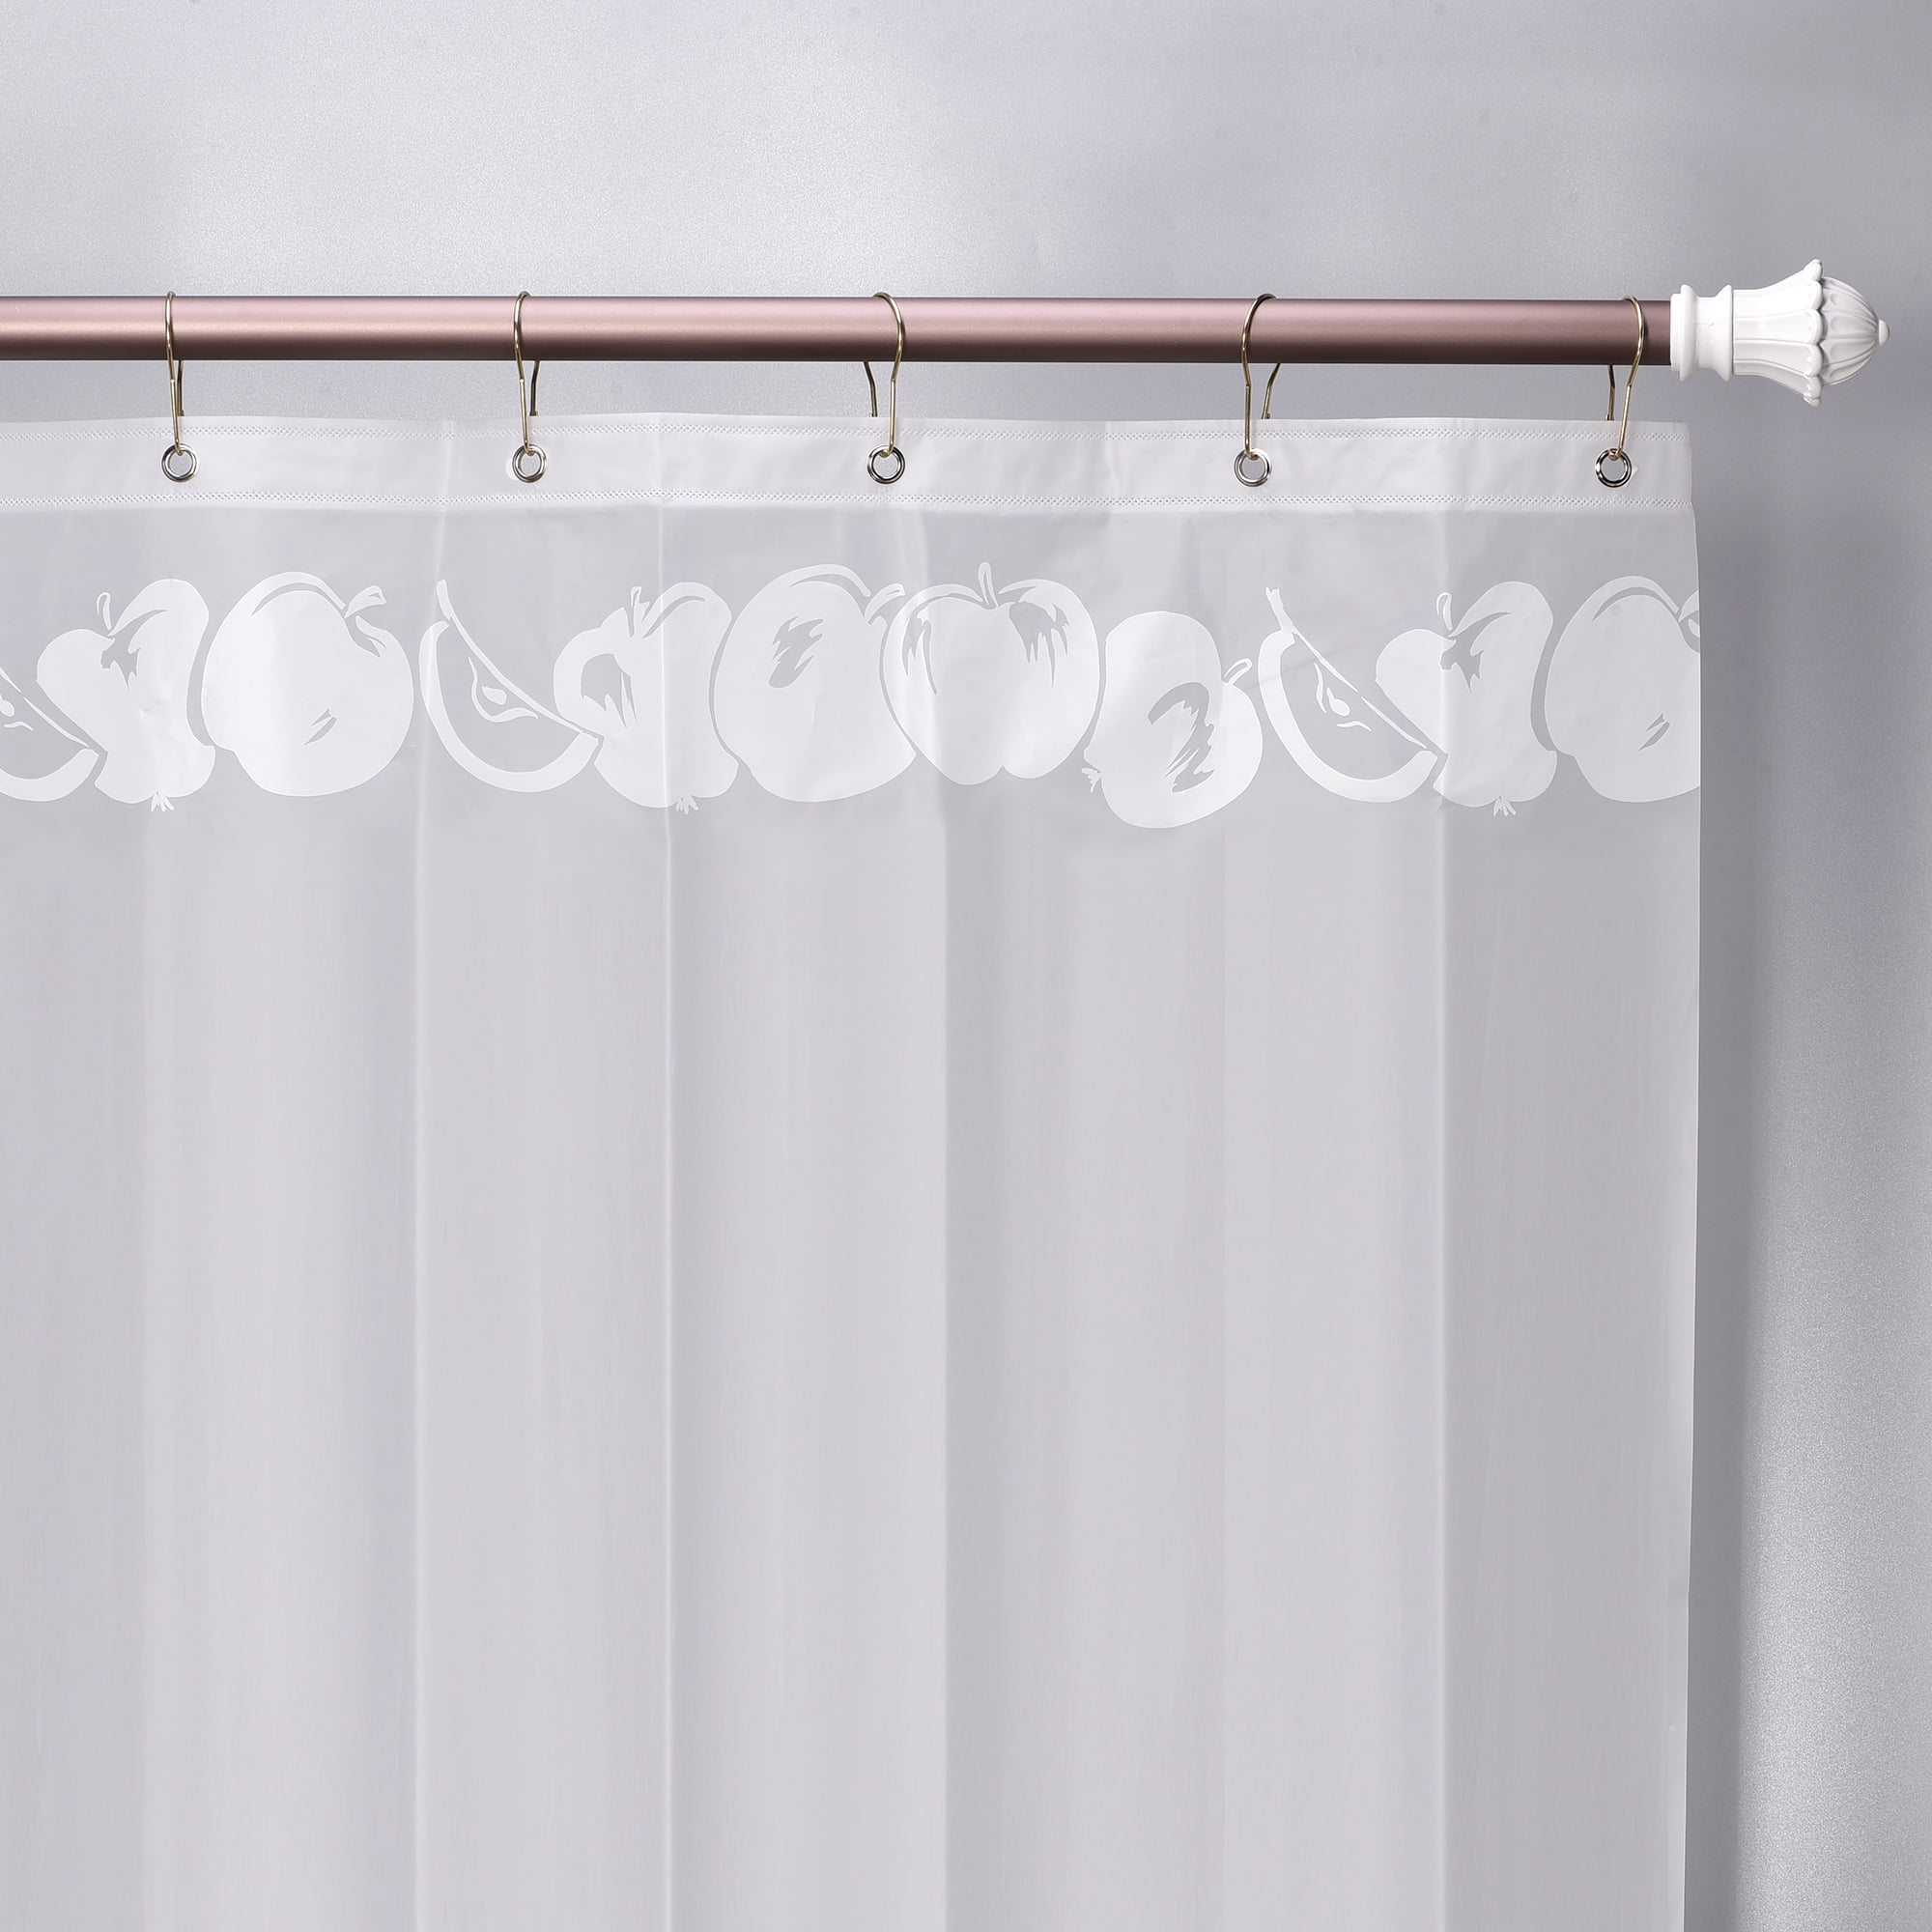 Gold Tone Calabash Shaped Metal Bathroom Shower Curtain Ring Hooks 20 Pcs 